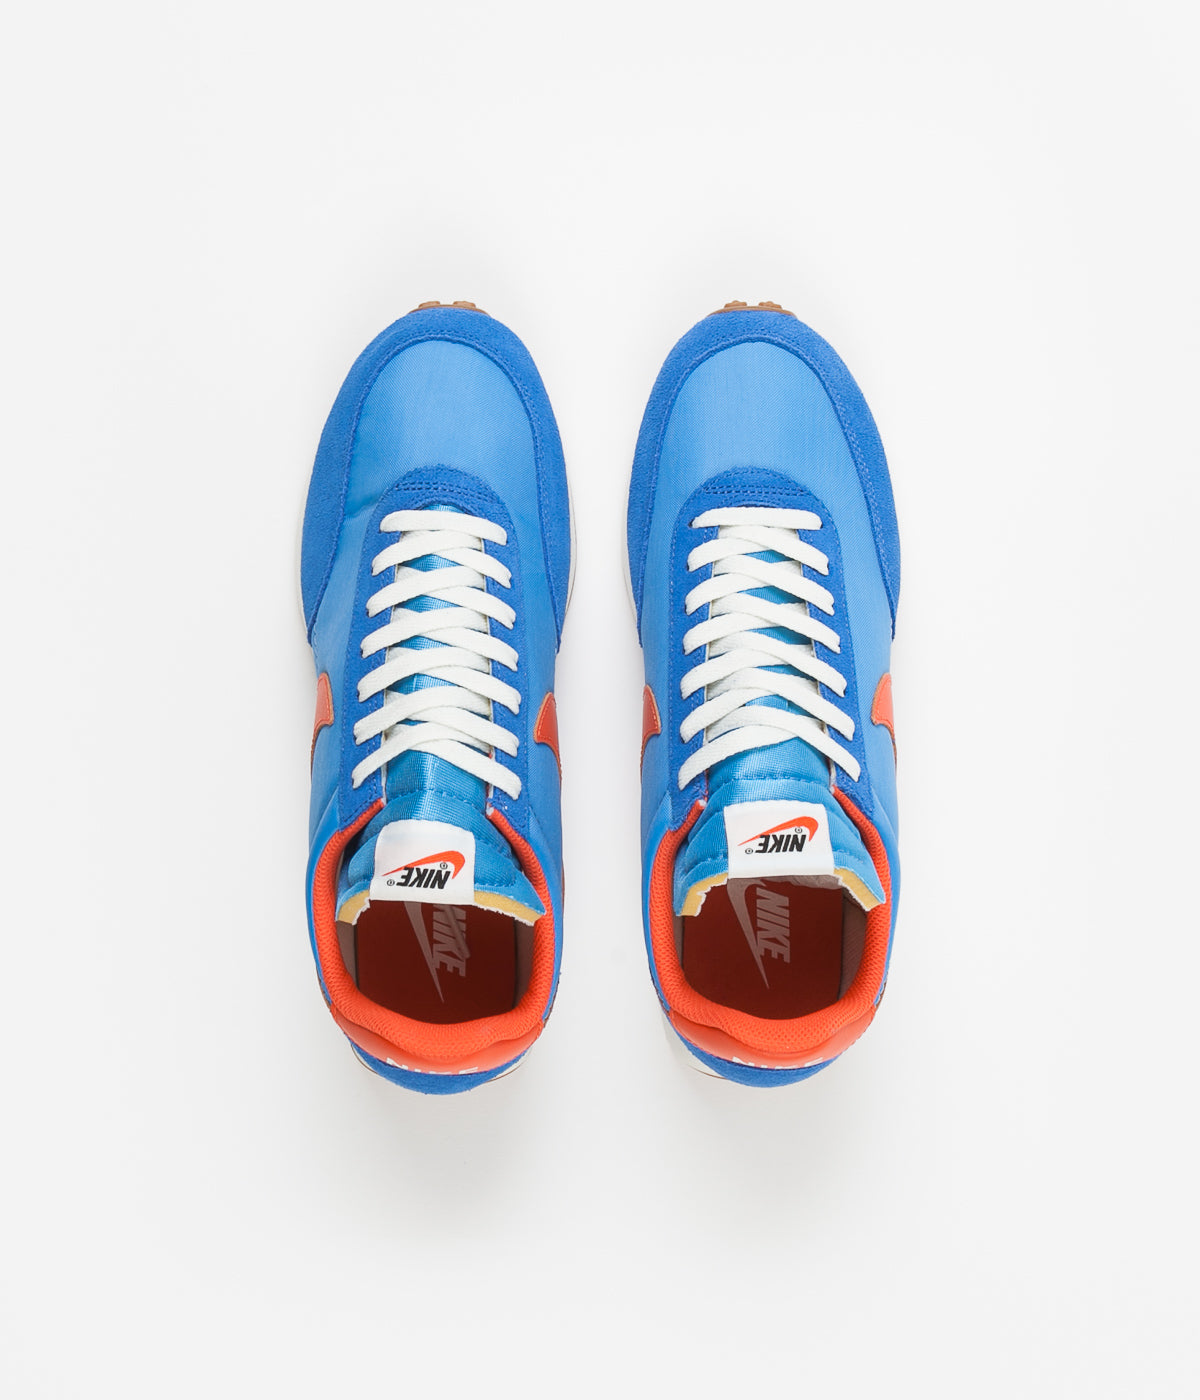 orange and blue nike shoes